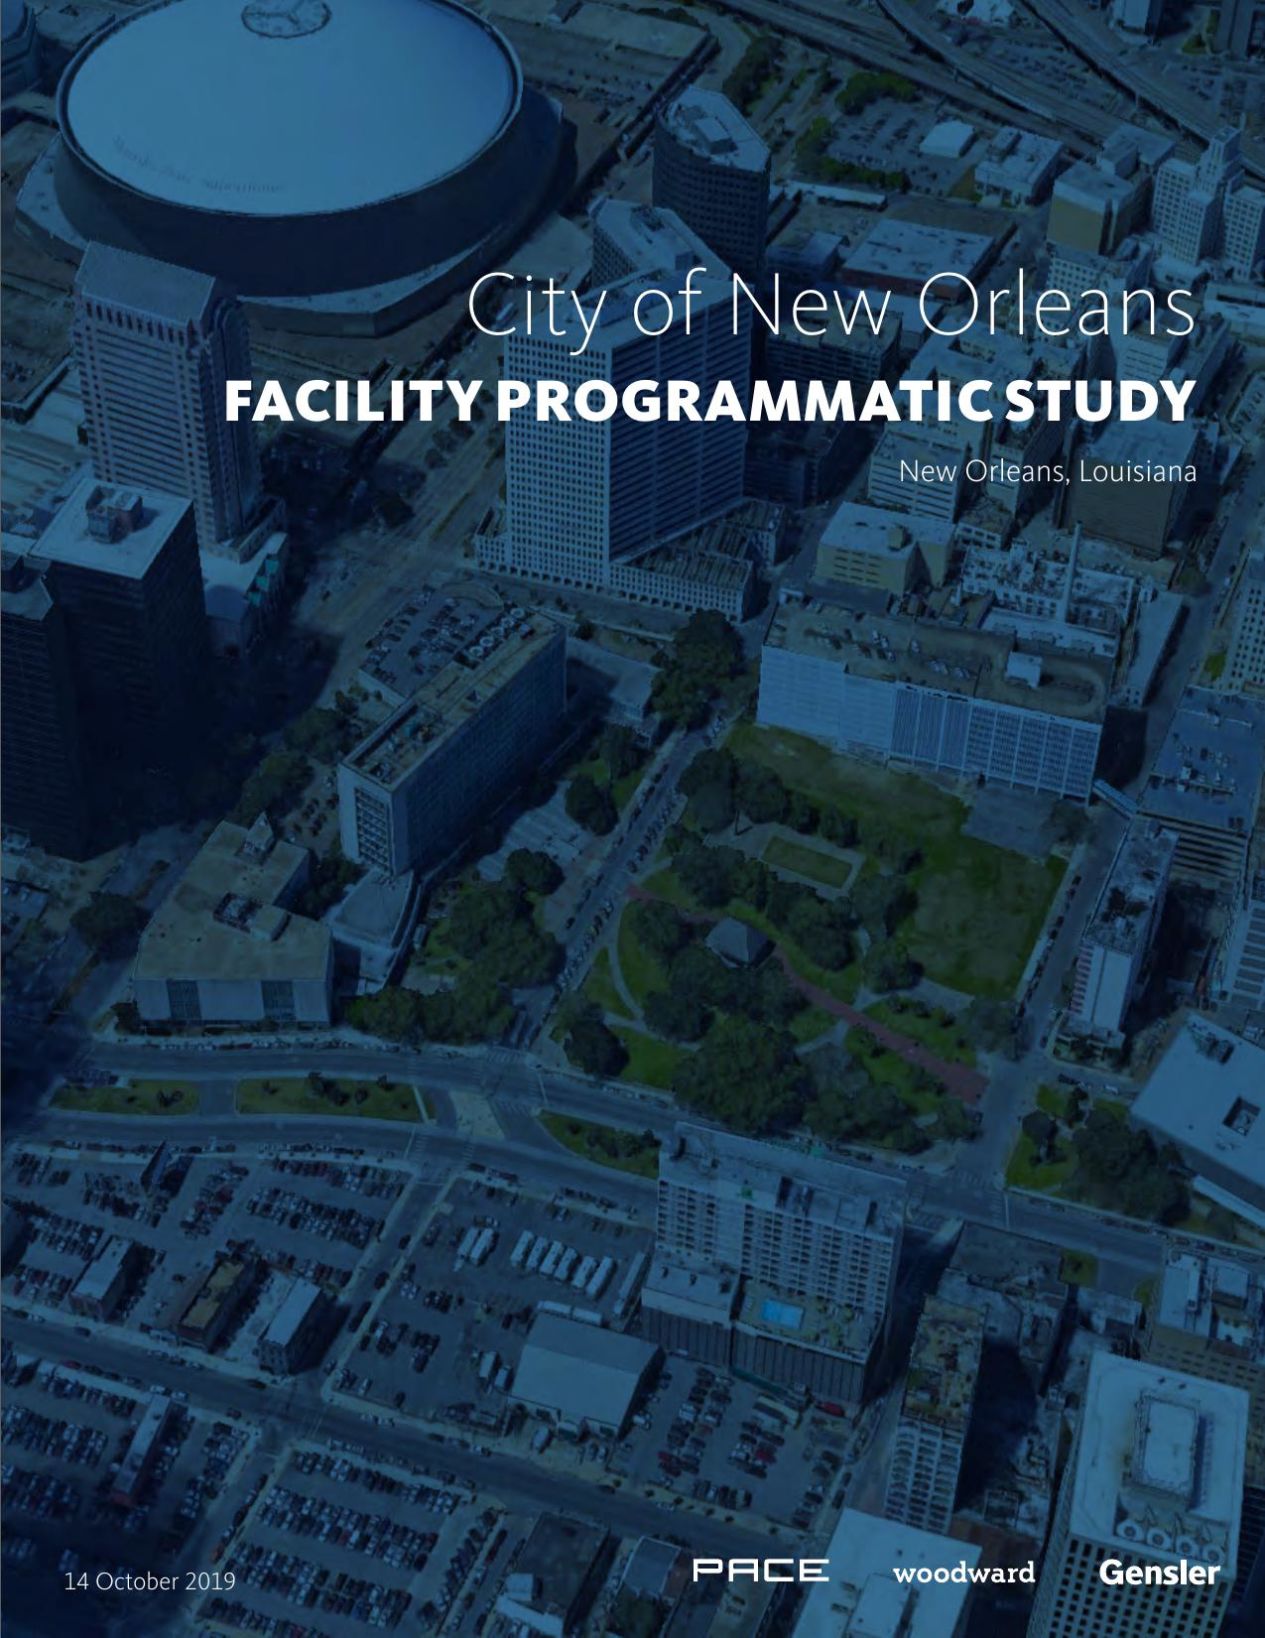 Read the full City Hall facility programming study